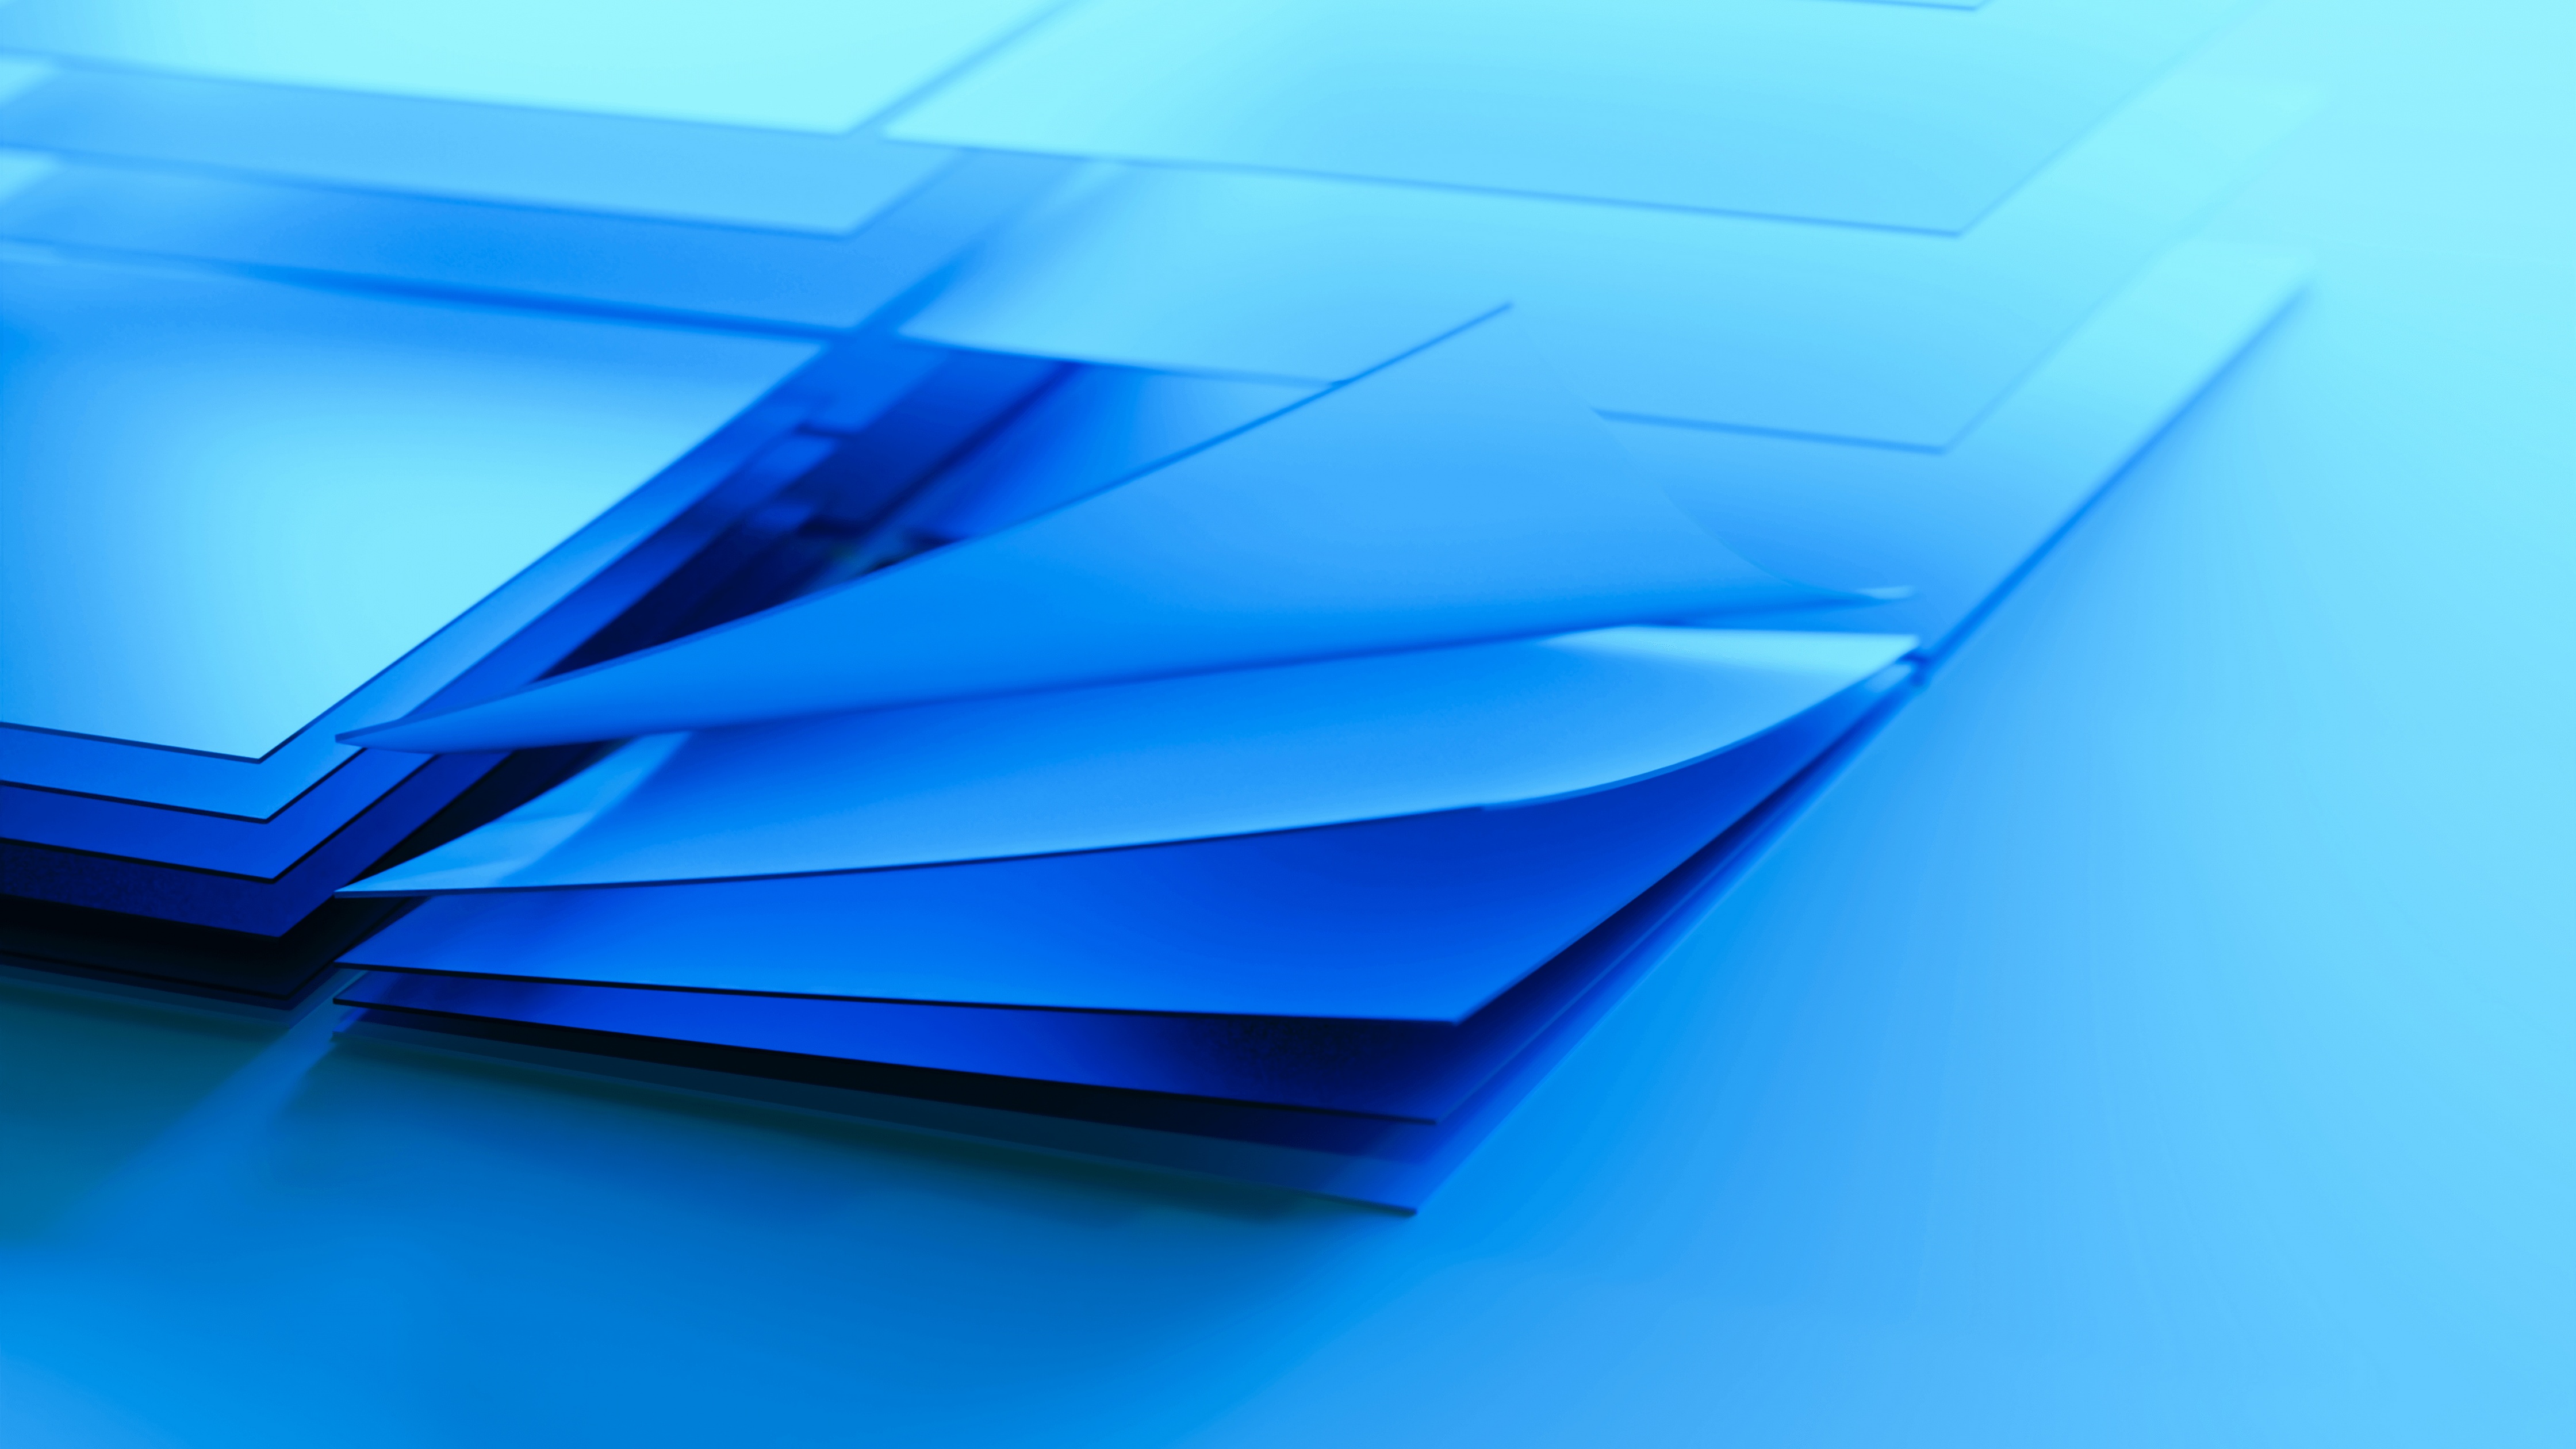 Windows logo Wallpaper 4K, Blue, Layers, 5K, Abstract, #4101